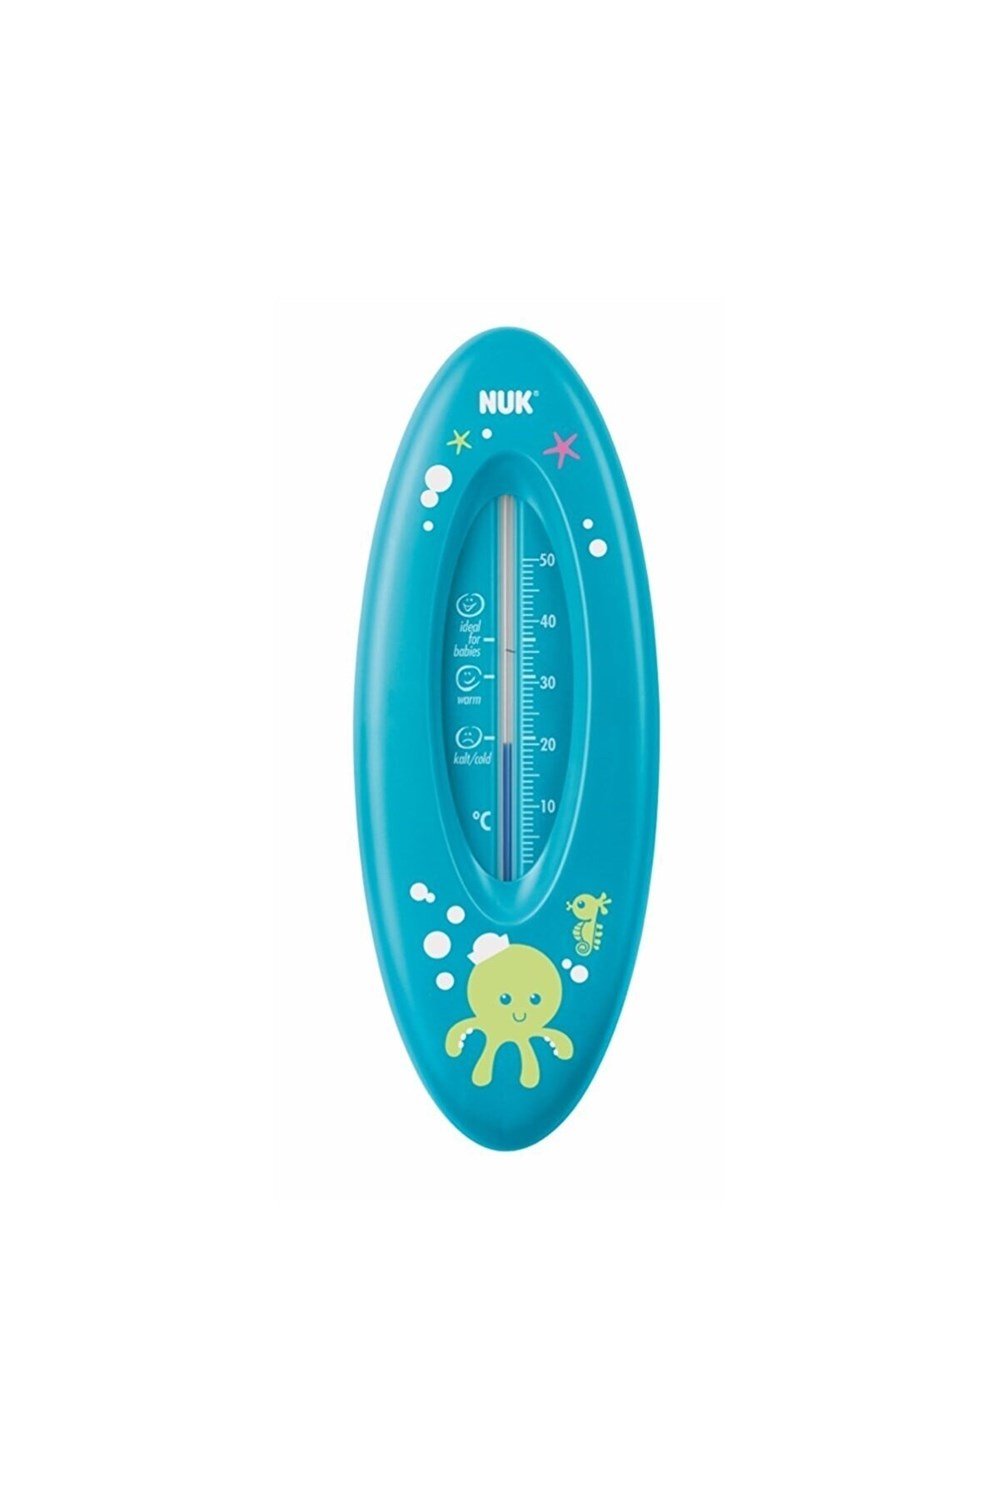 Nuk Banyo Termometresi | lorellishop.com